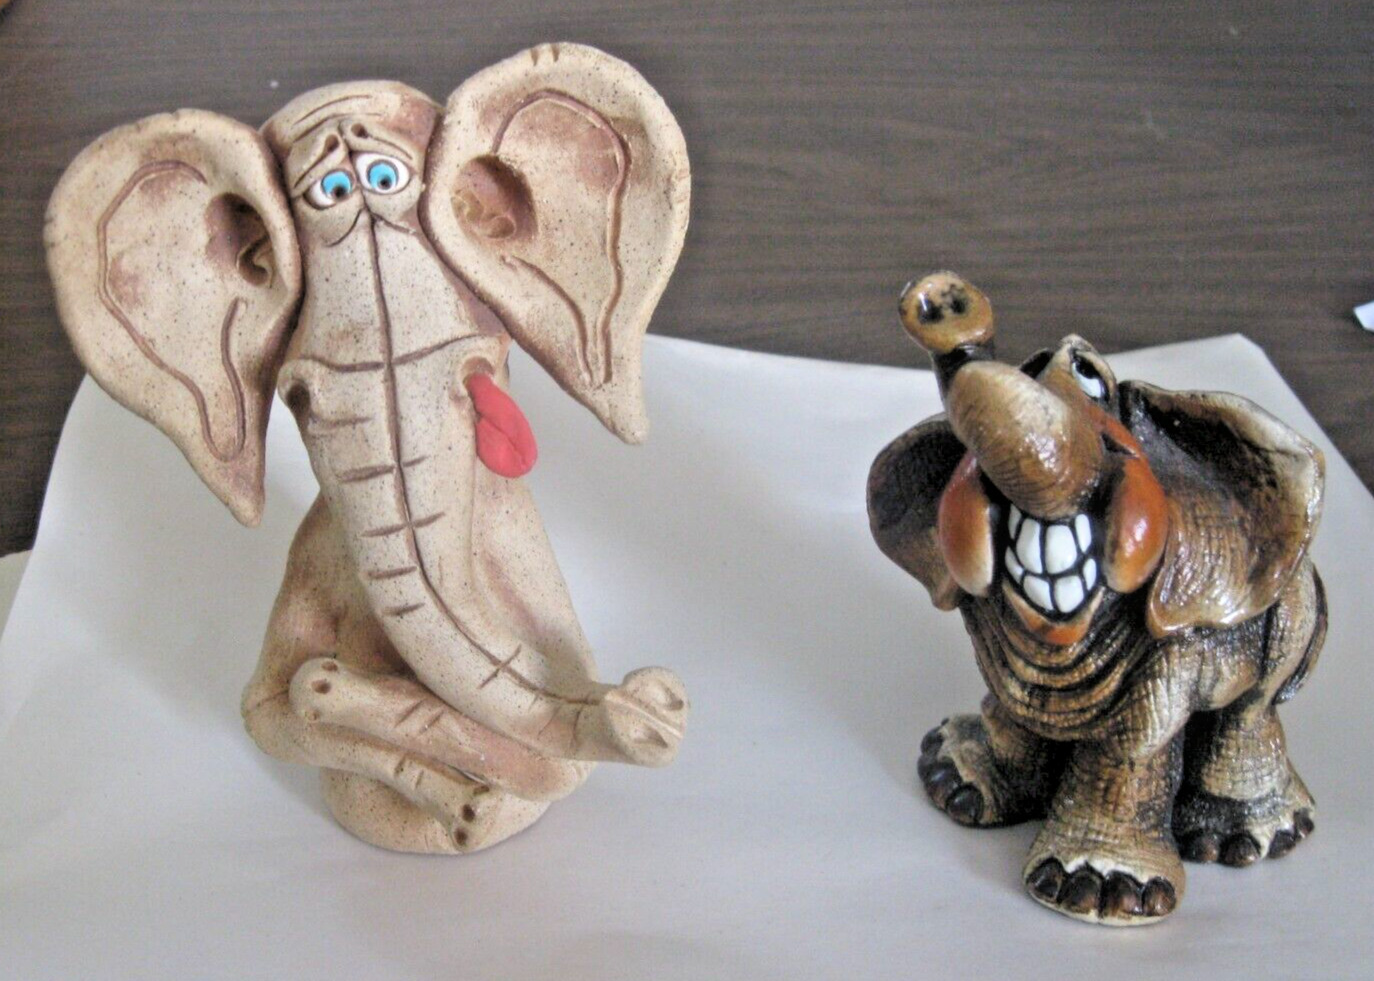 2 Whimsical Anthropomorphic Pottery ELEPHANT Figures - John Ray Beasties & Unk.